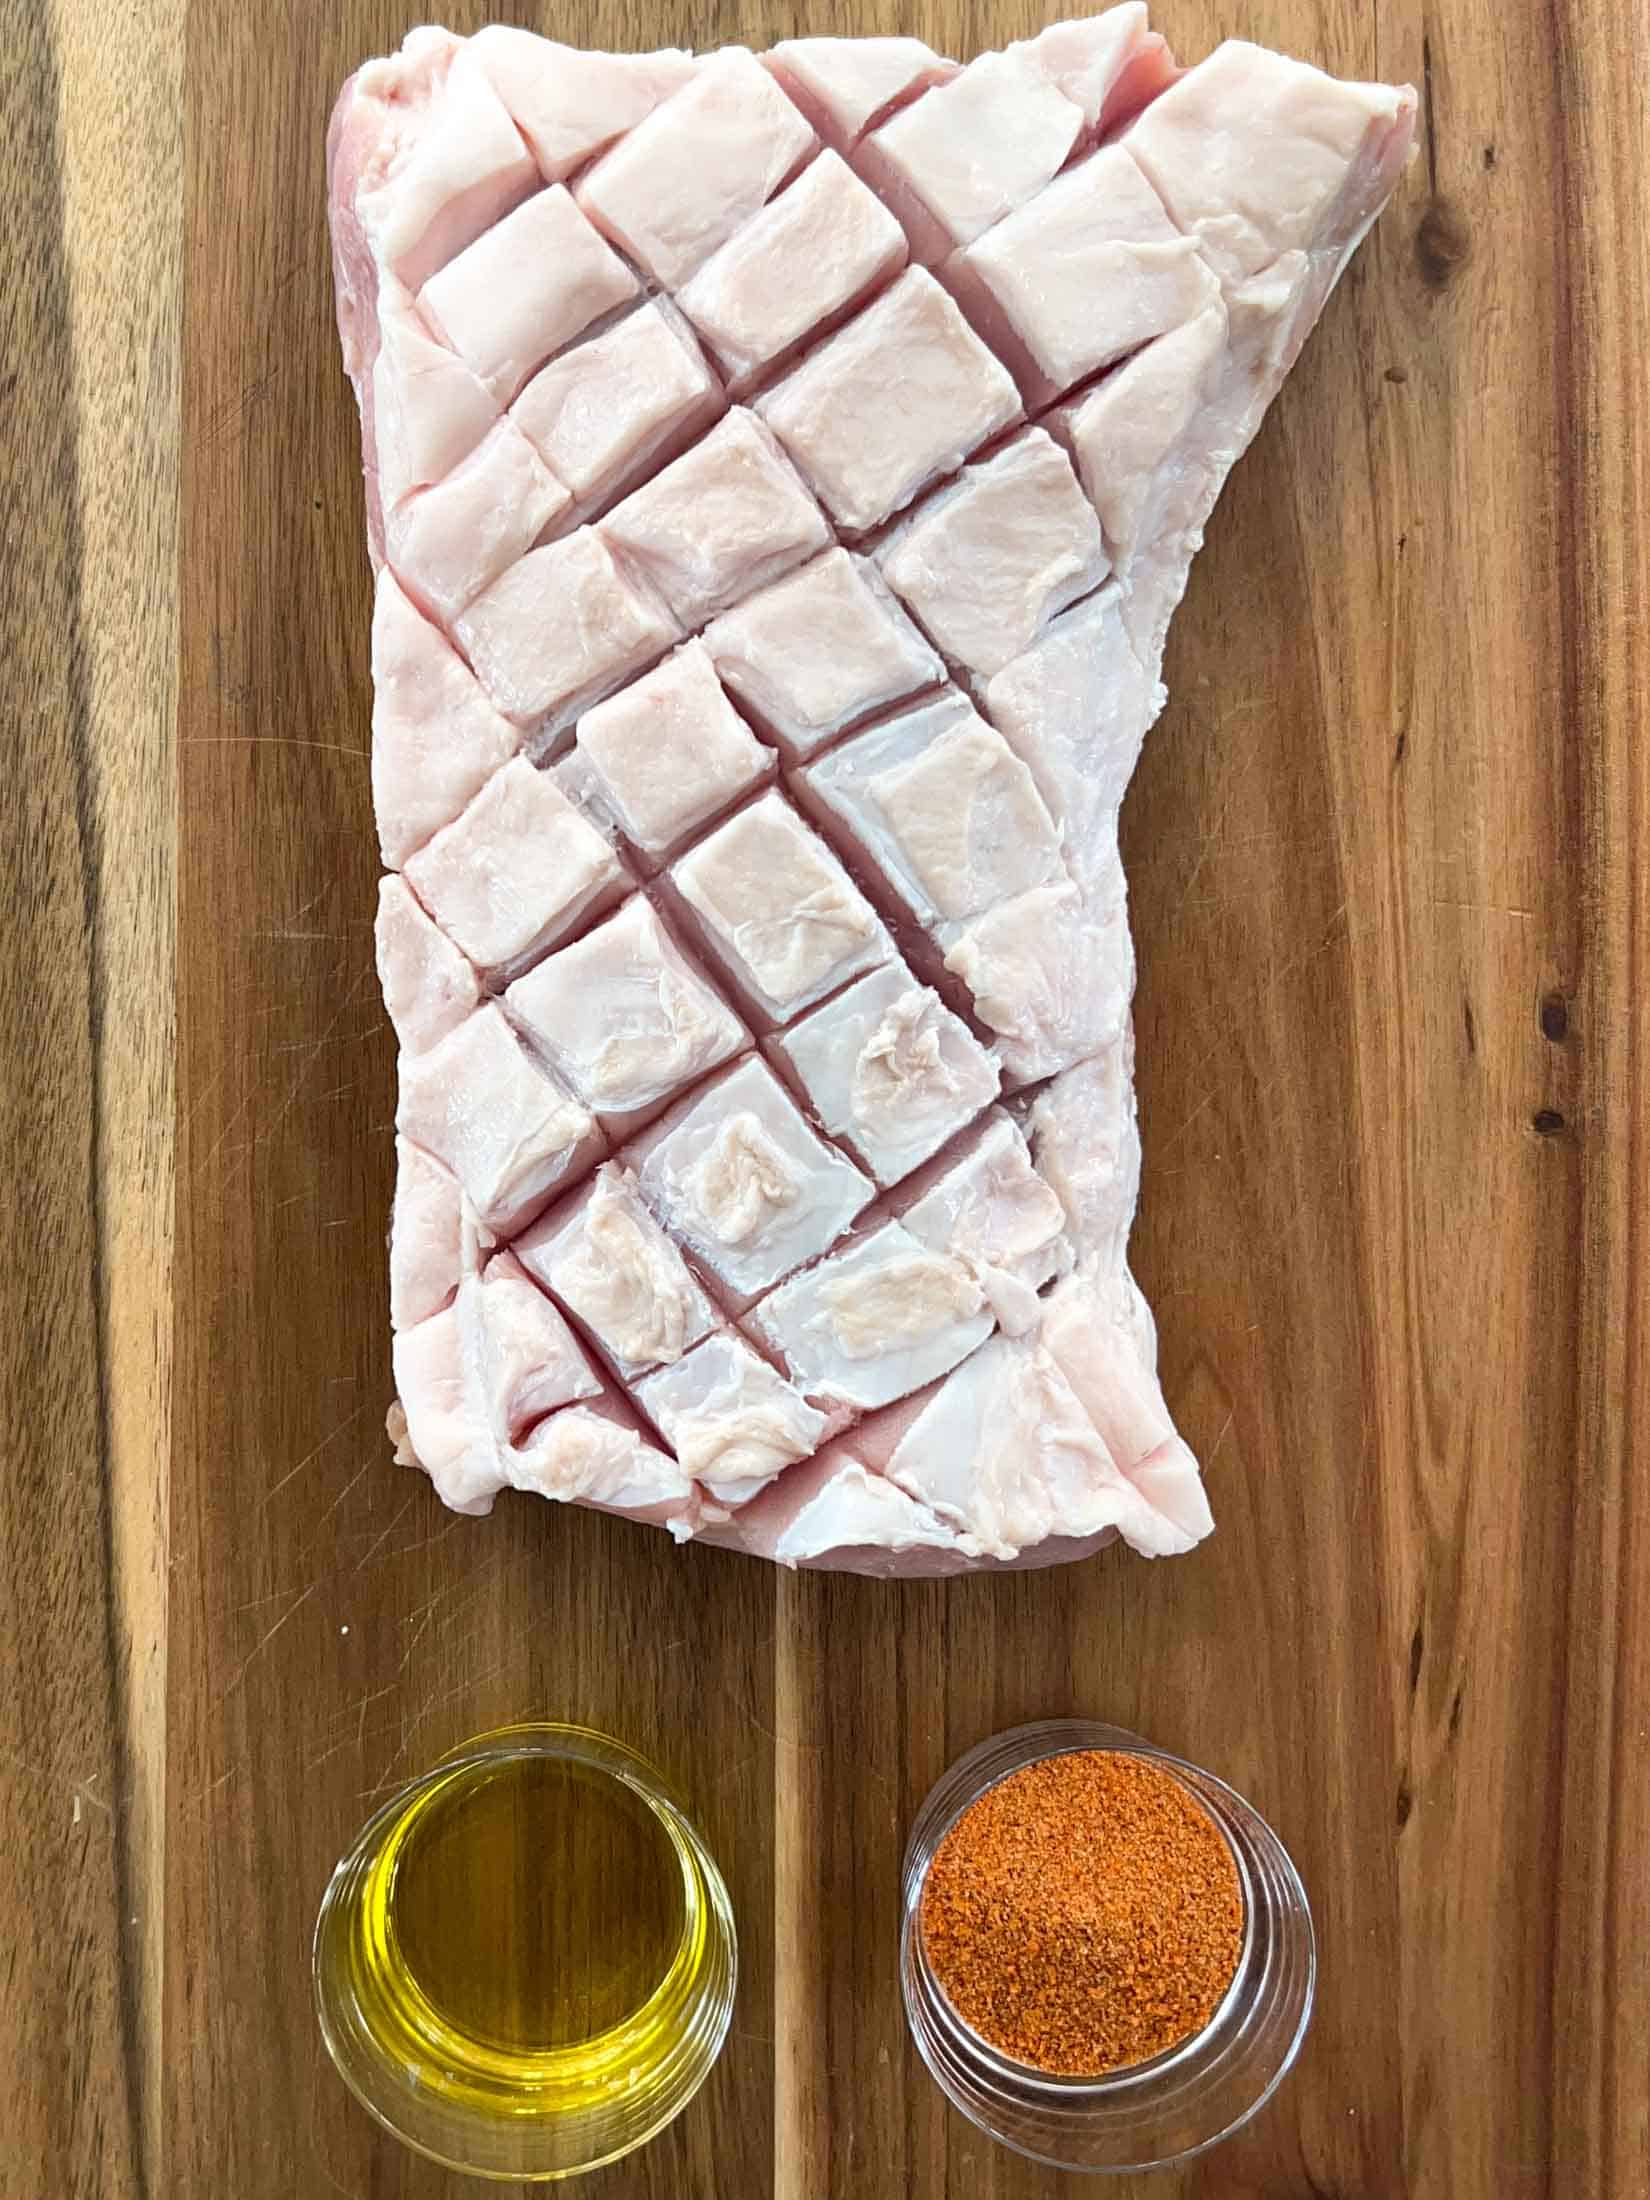 Key ingredients for pork loin roast including a 3 pound roast, olive oil, and pork rub.